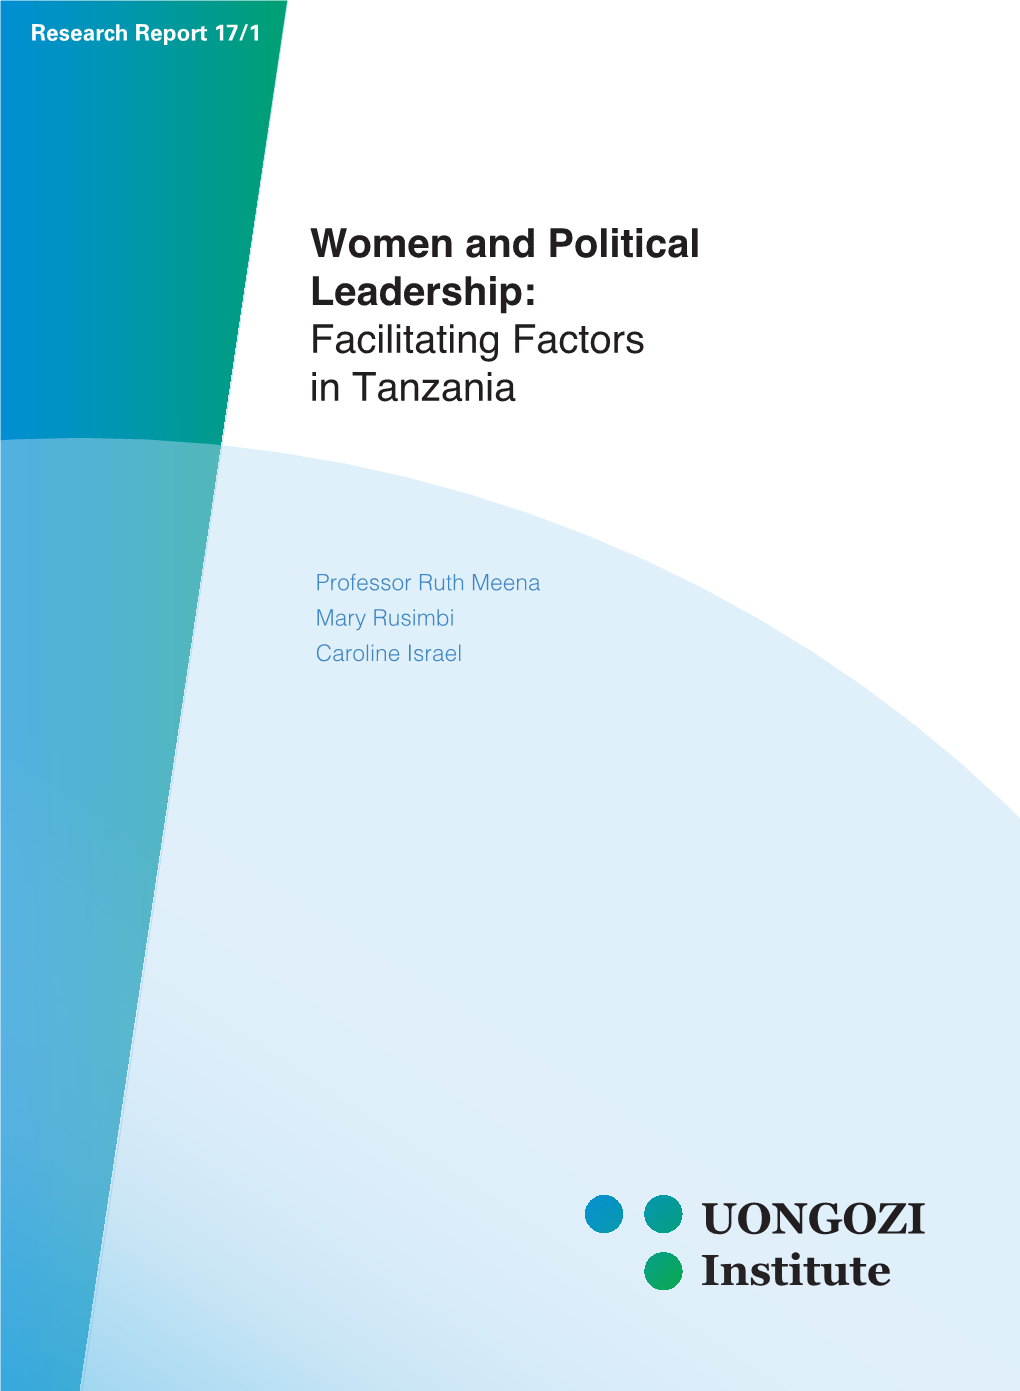 Women and Political Leadership: Facilitating Factors in Tanzania